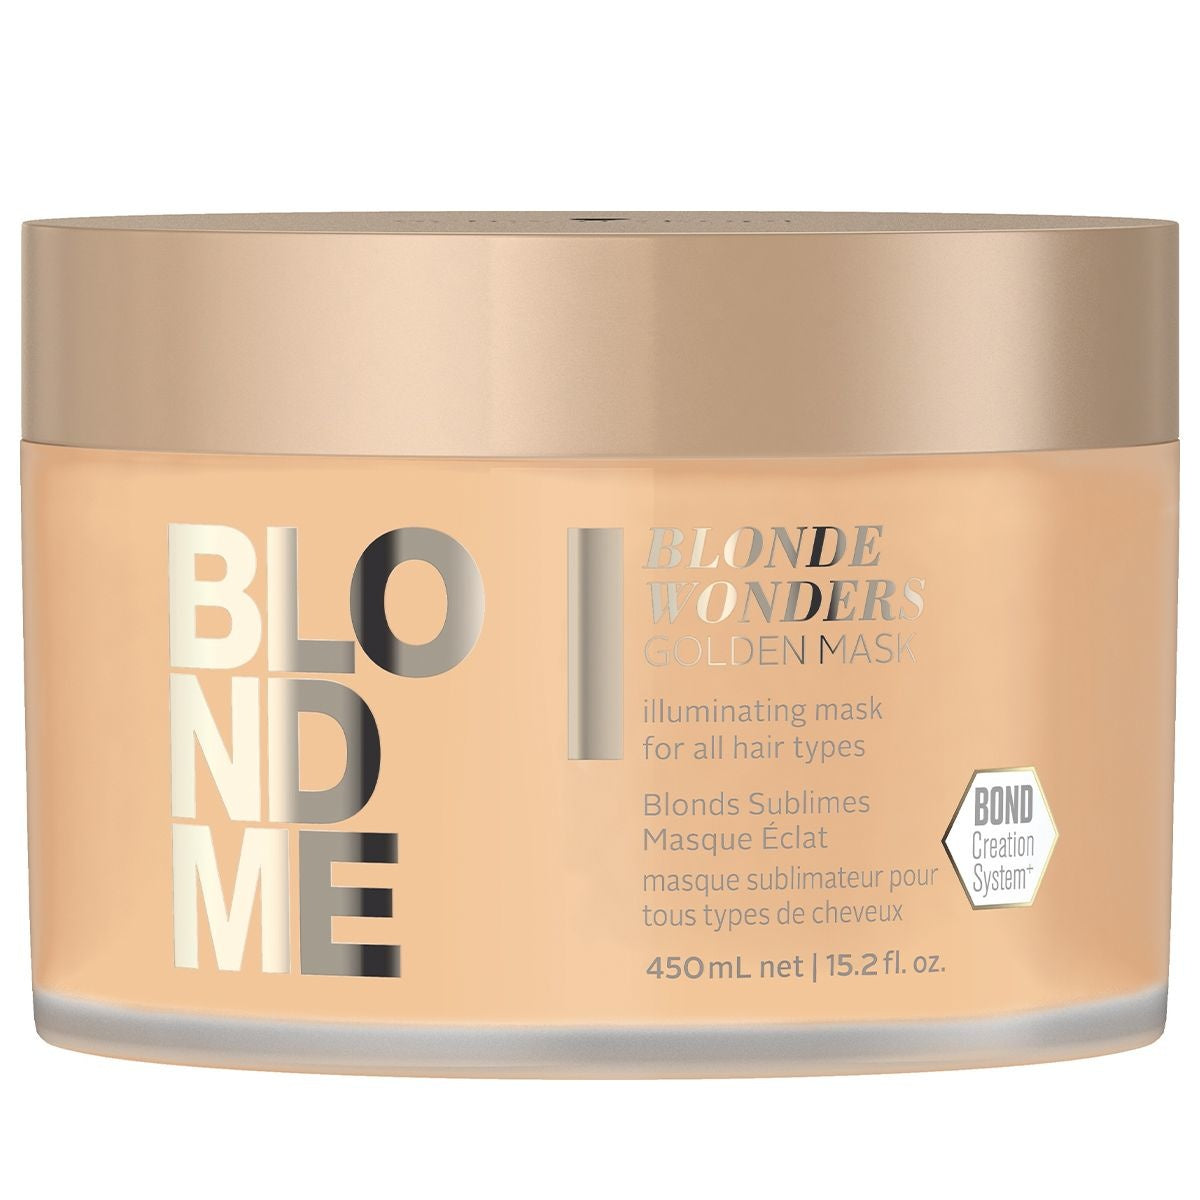 BLONDME Blonde Wonders Golden Mask 450ml